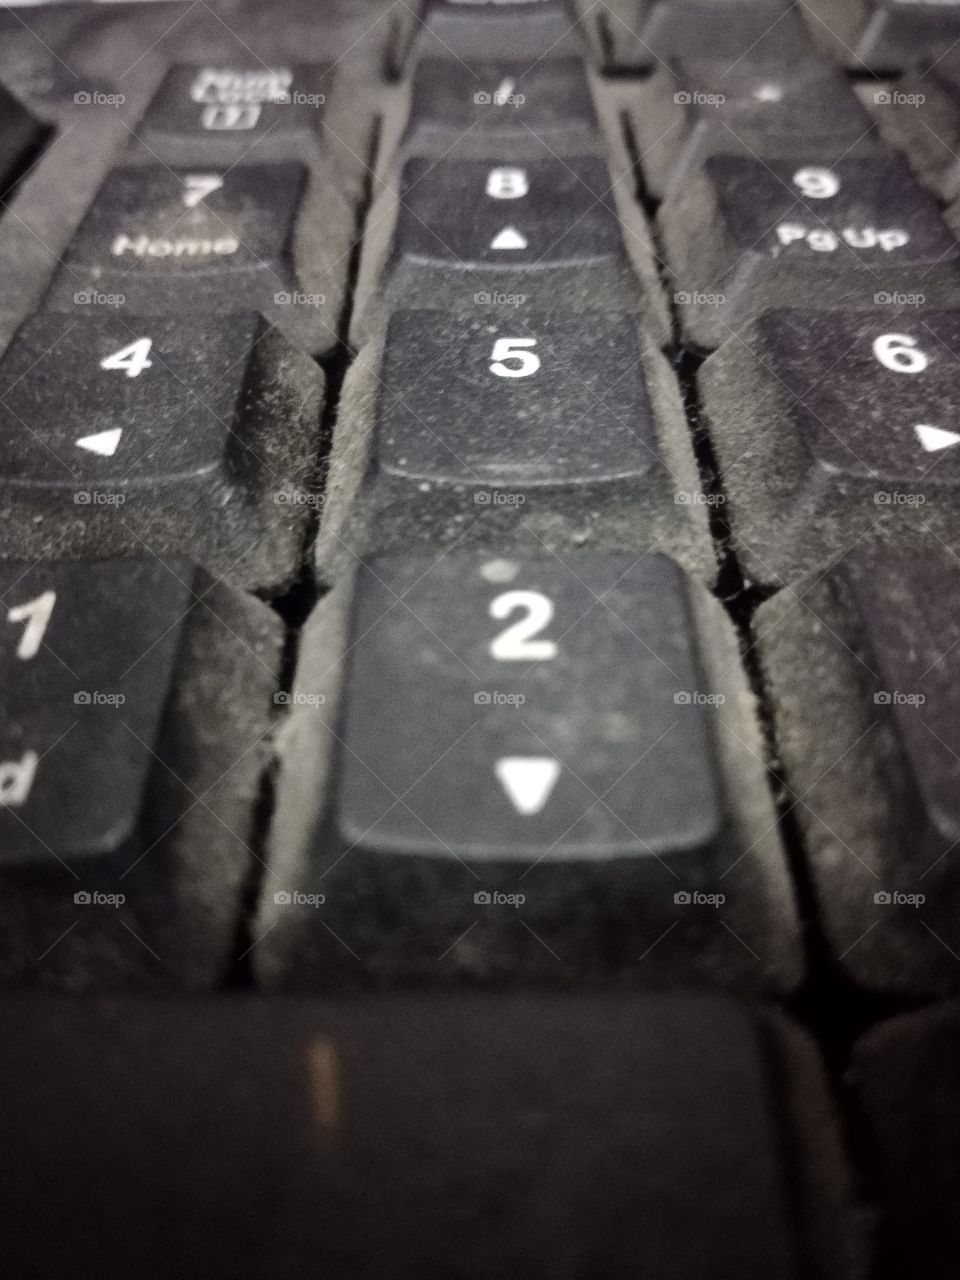 normal keyboard